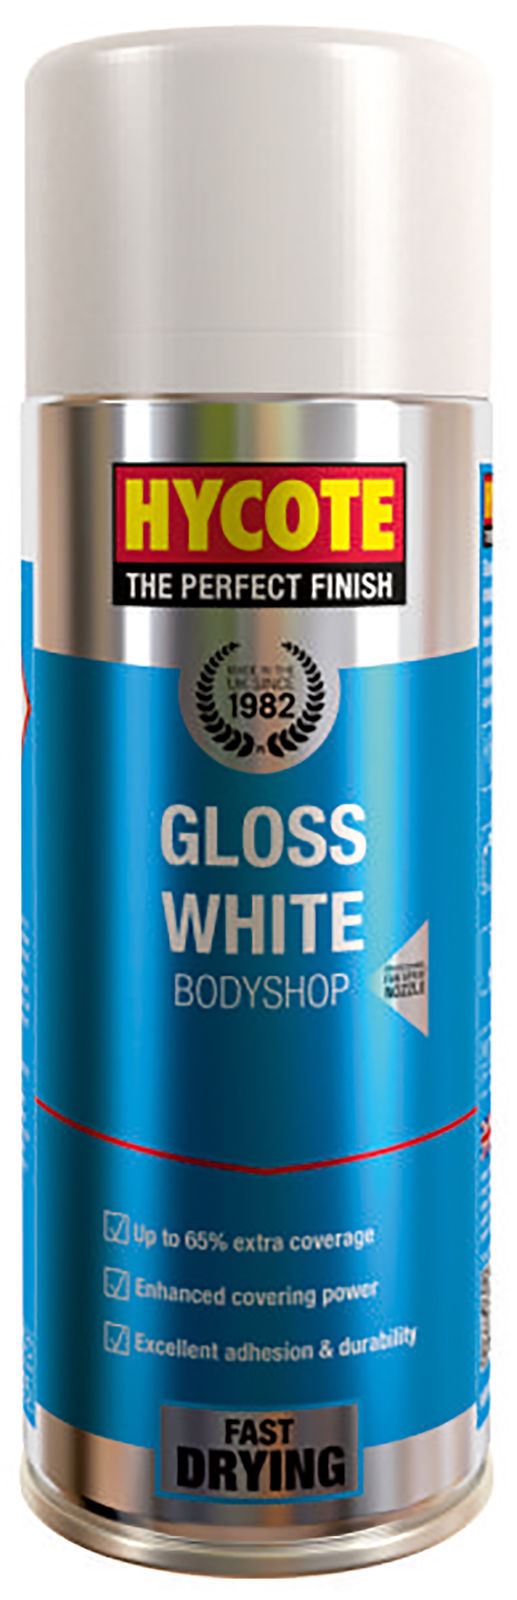 Hycote Bodyshop Gloss White Paint - 400ml